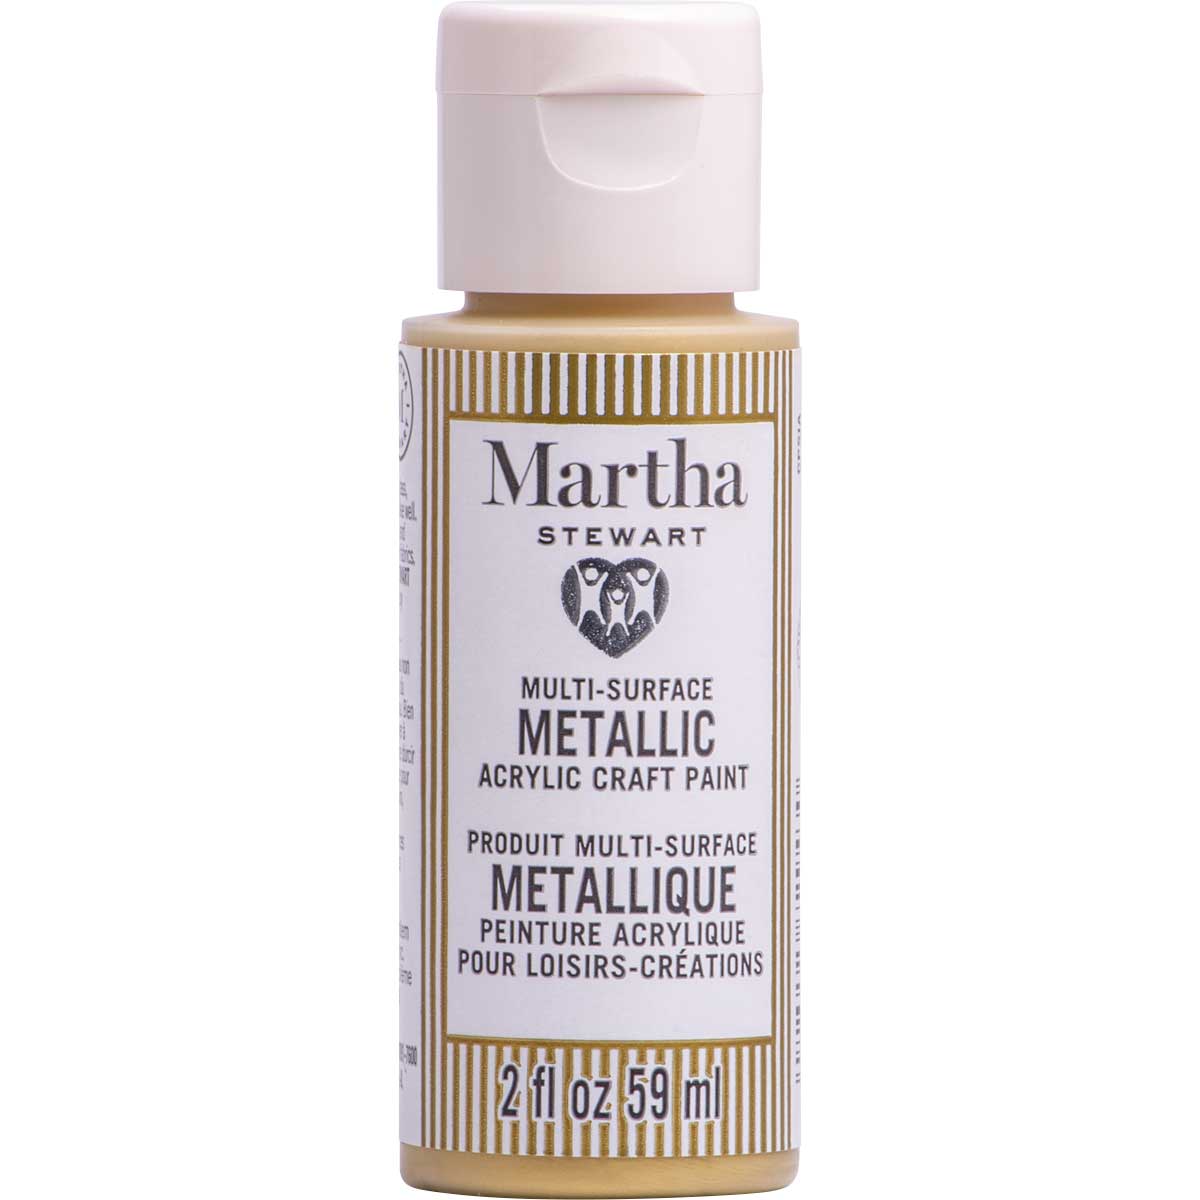 Martha Stewart ® Multi-Surface Metallic Acrylic Craft Paint CPSIA - Royal Gold, 2 oz. - 72943